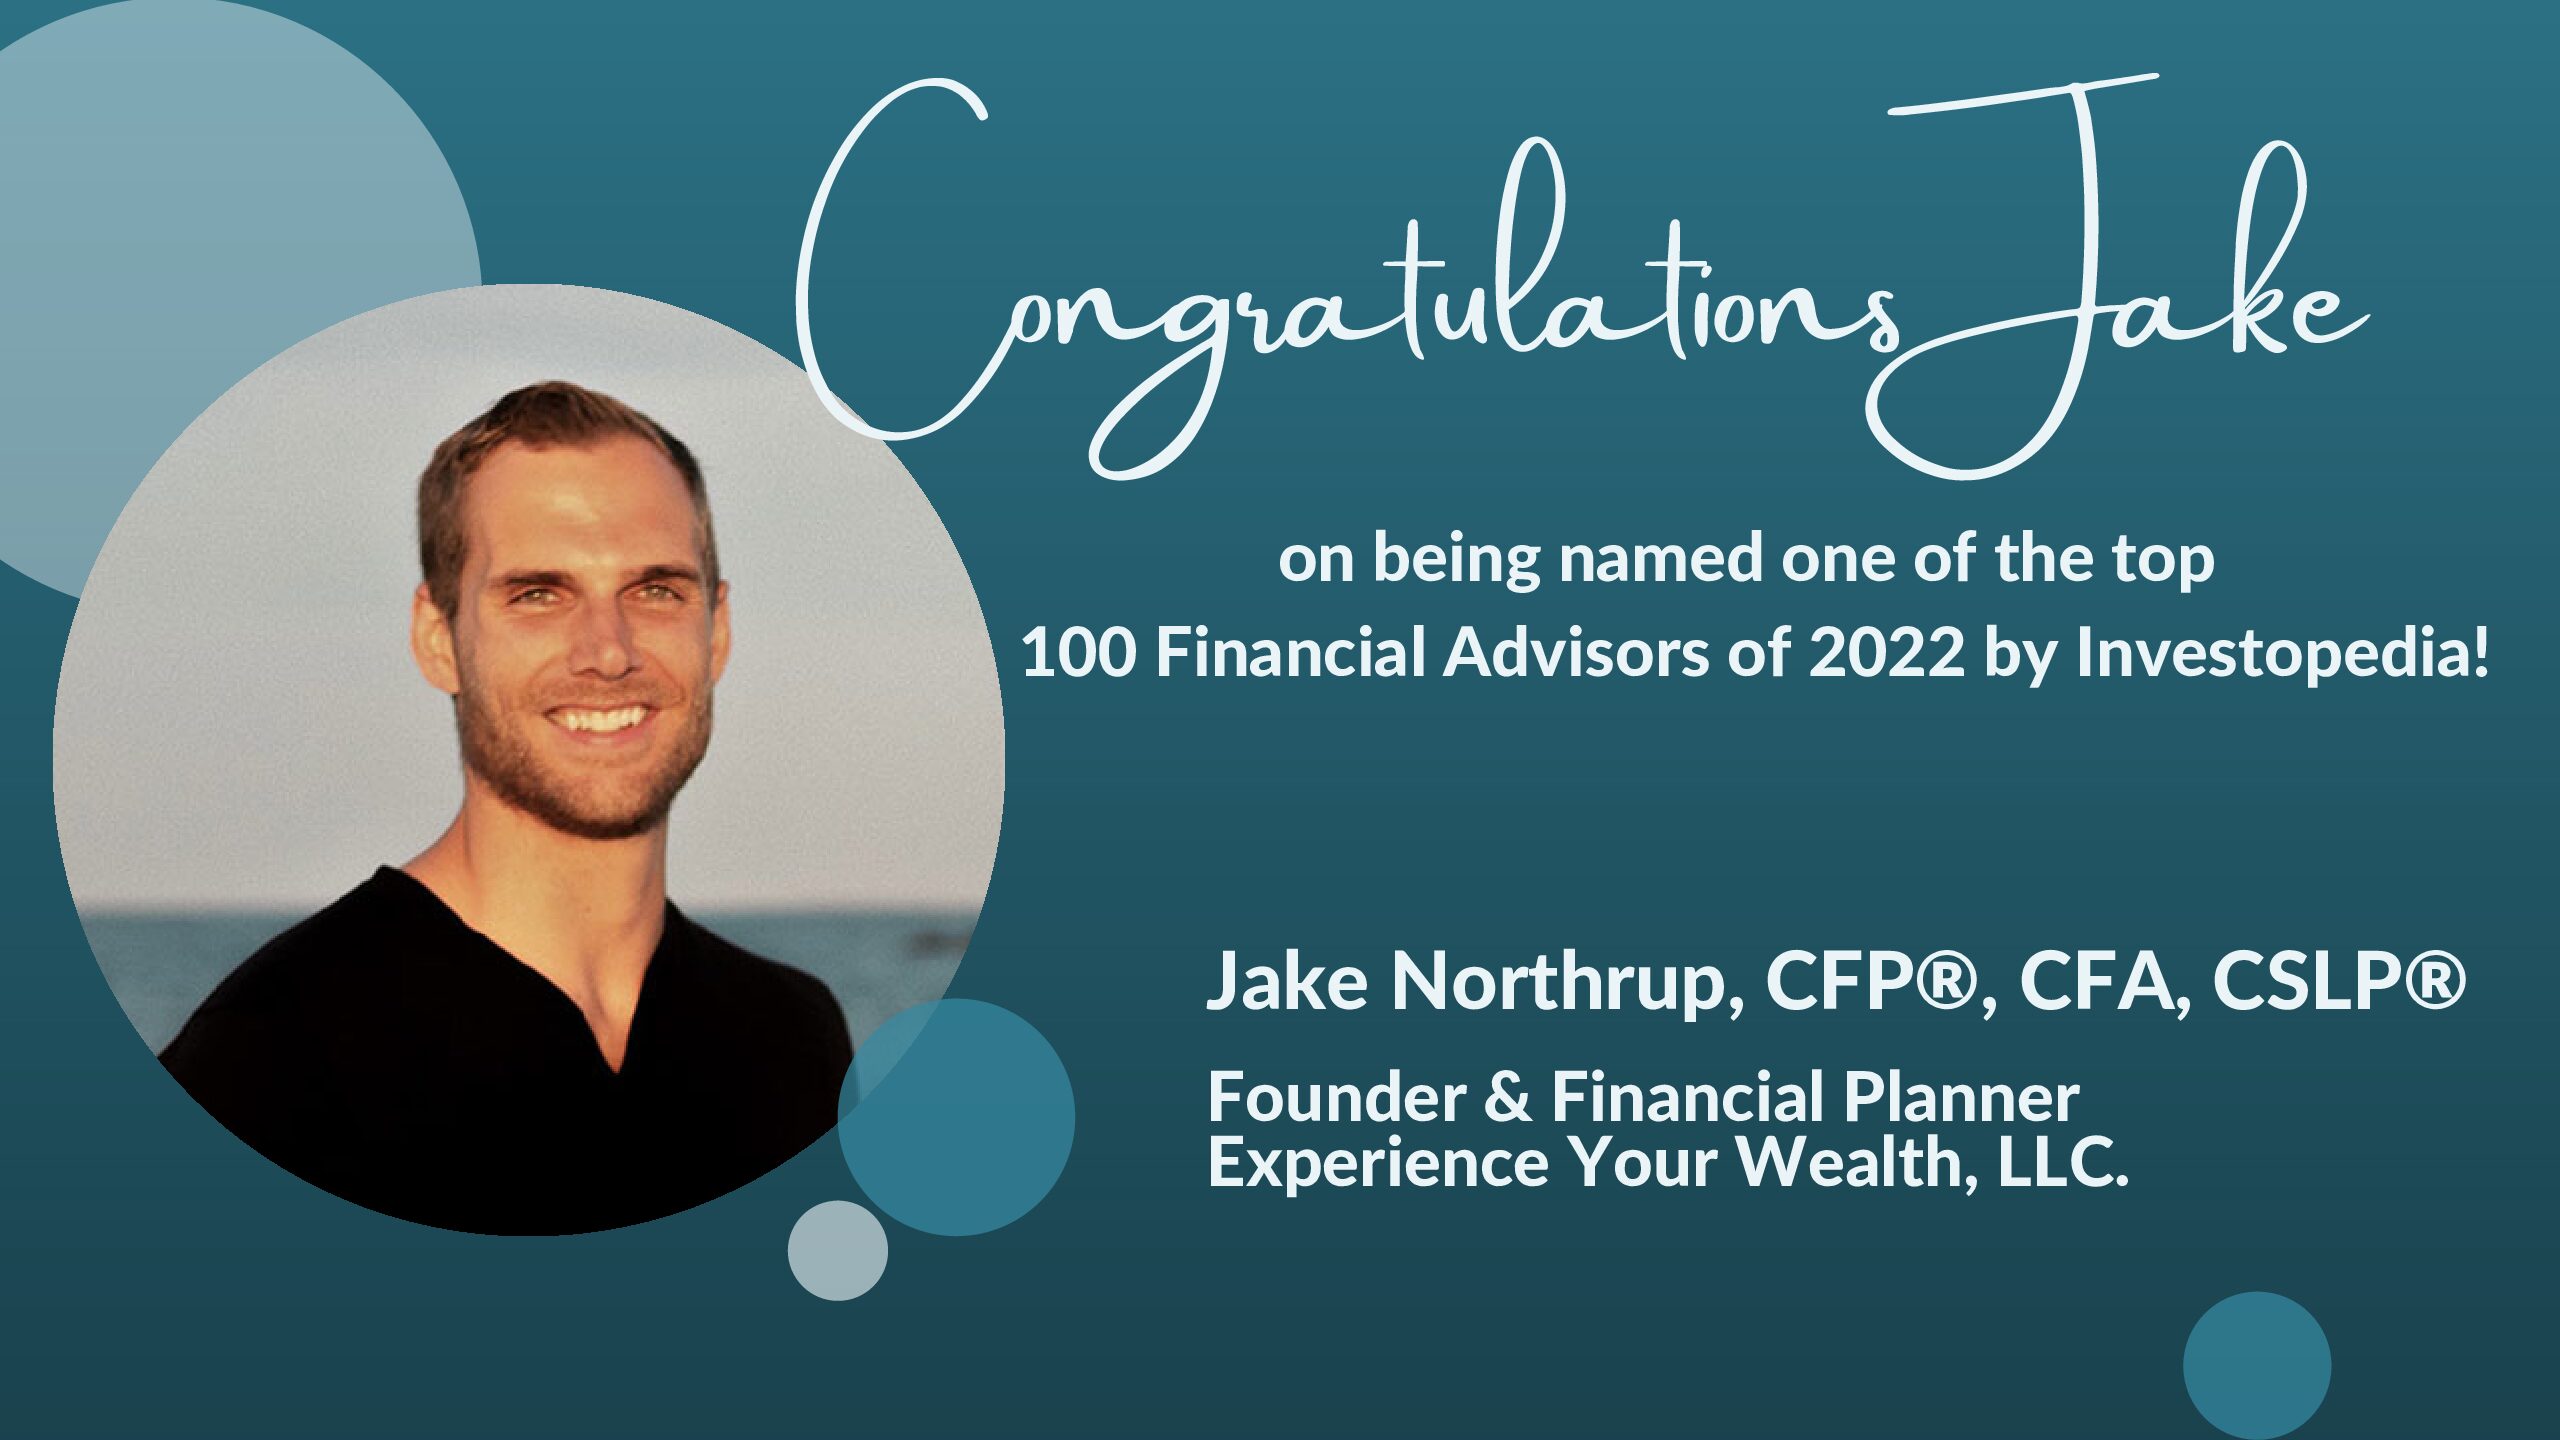 Congratulations Jake!